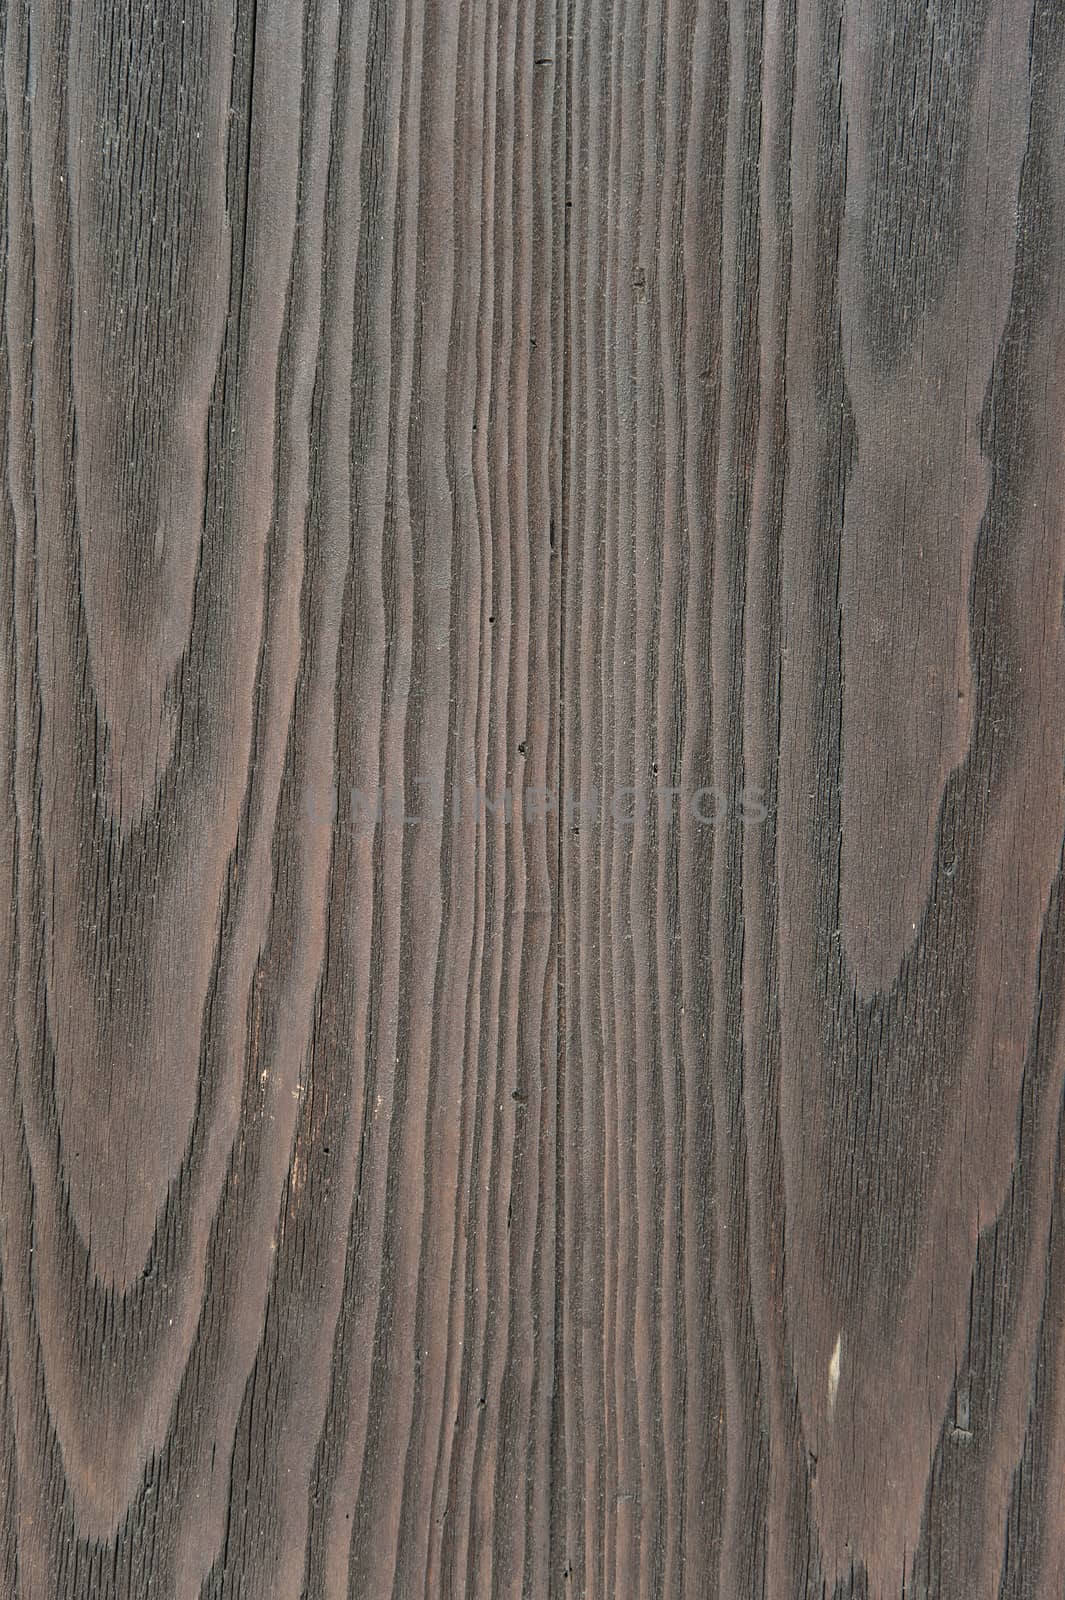 Wooden texture dramatic light, natural pattern